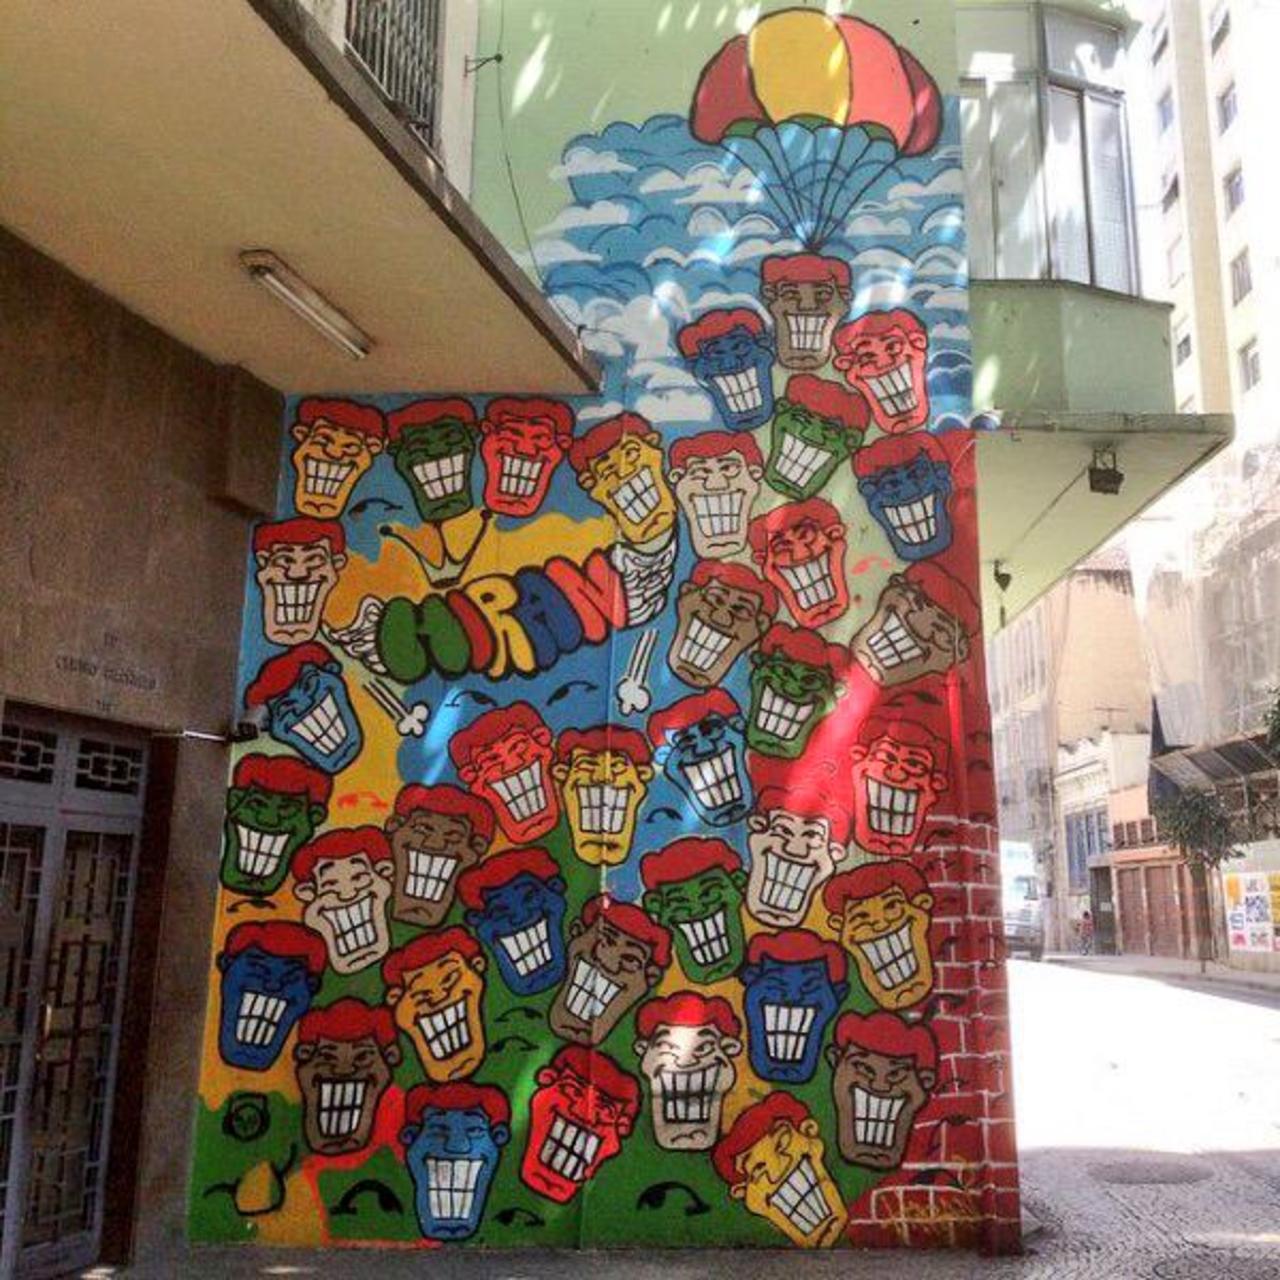 Hiran
Rio de Janeiro, Brazil
#streetart #art #graffiti #mural http://t.co/aTdB2YlLlD